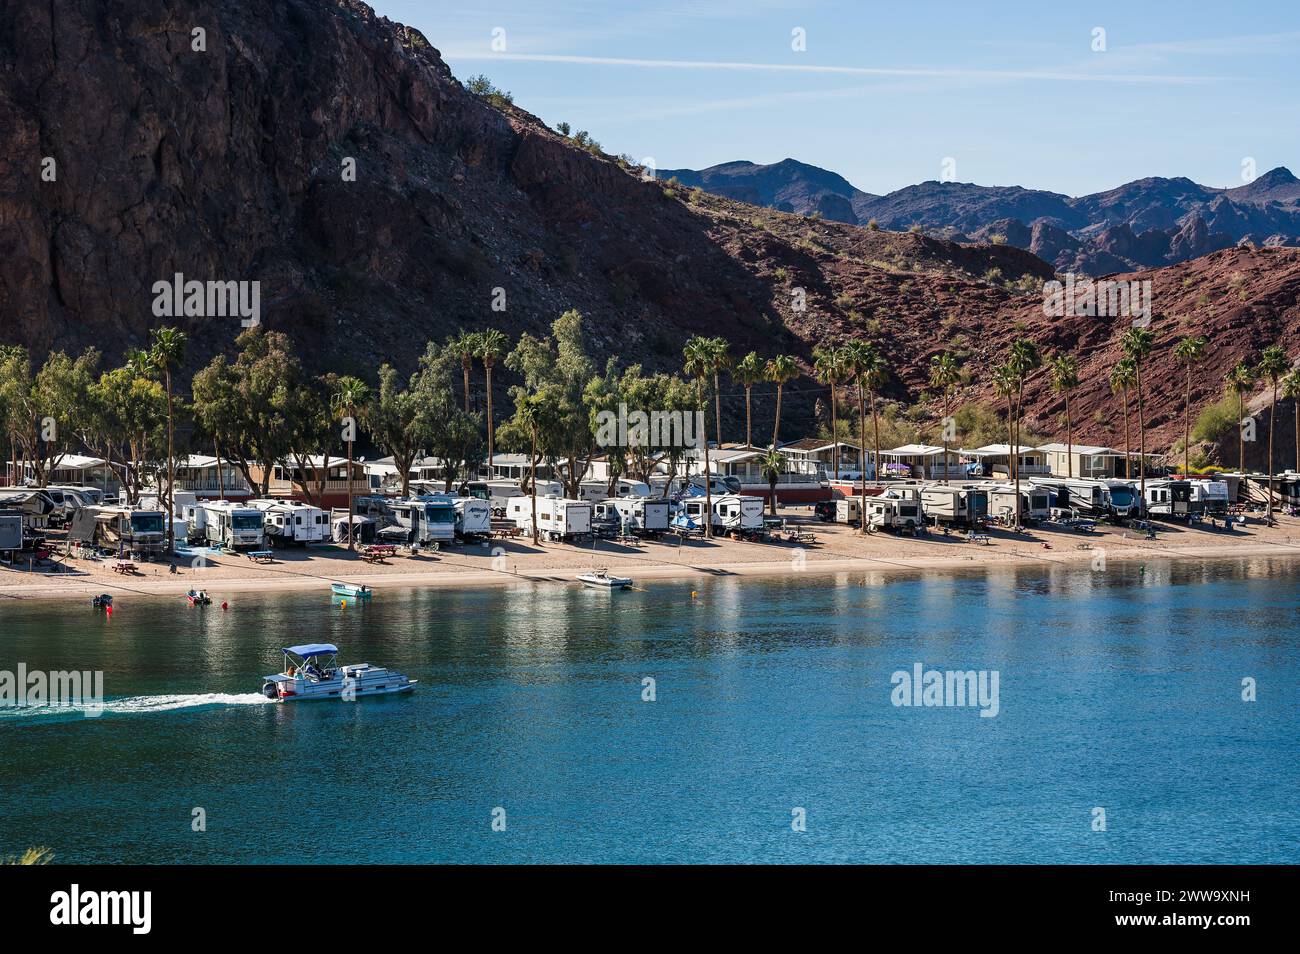 Campgrounds and resorts along the Colorado River below the Parker Dam.  California - Arizona border. Stock Photo